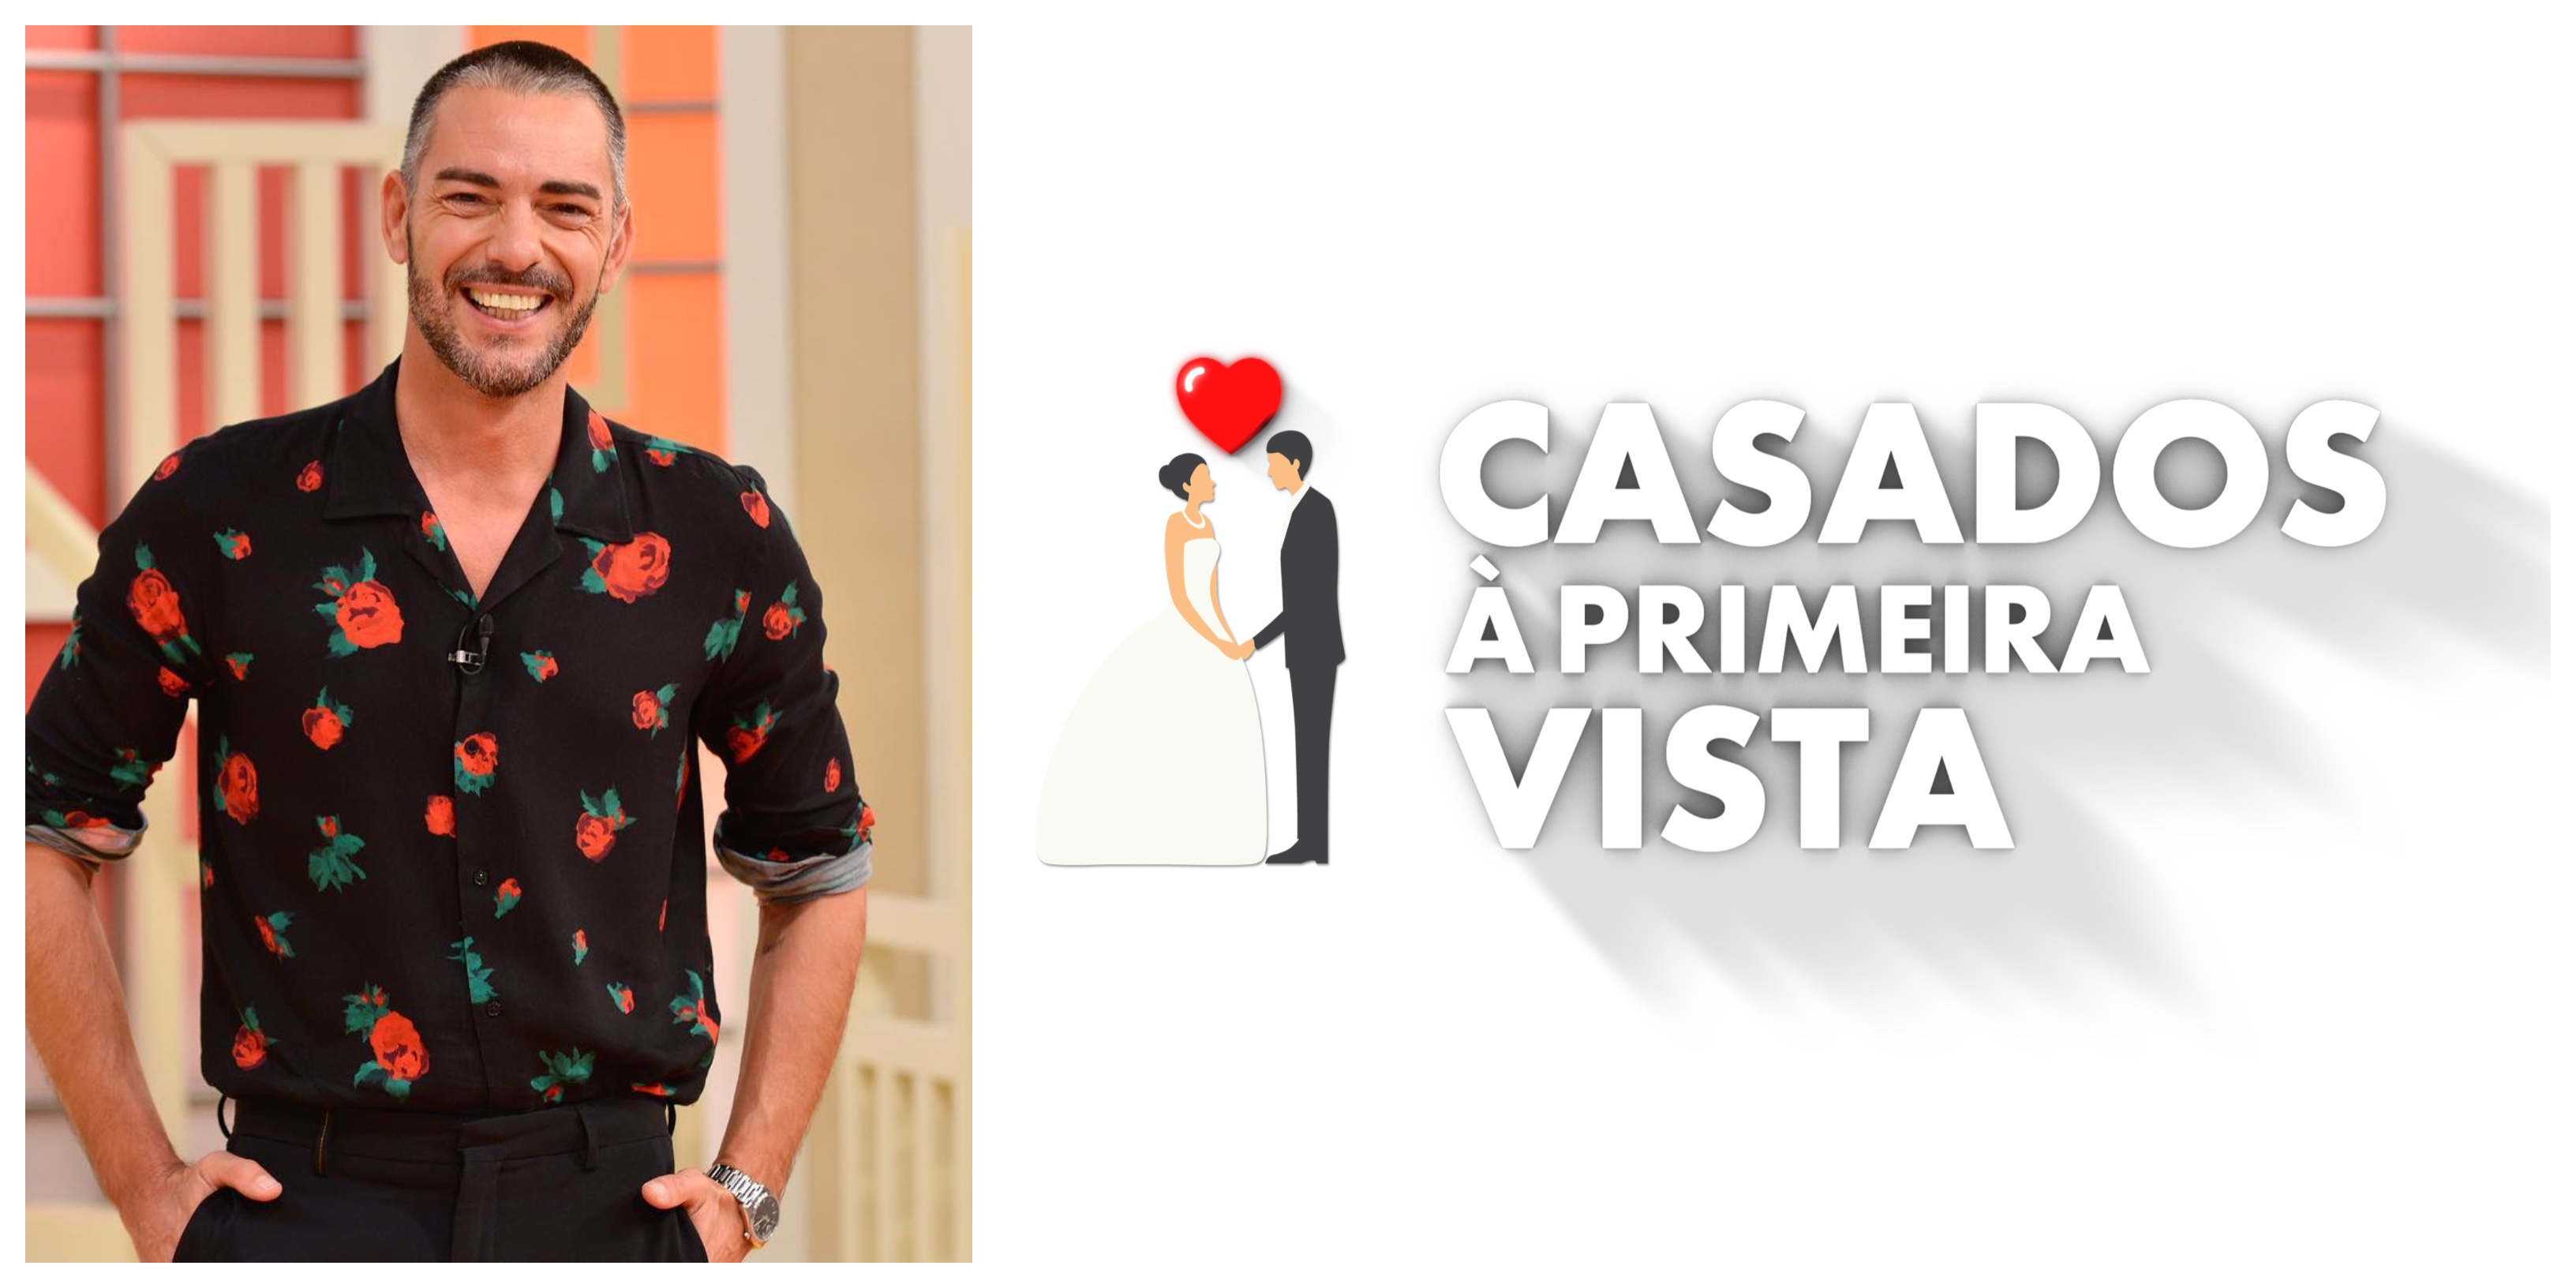 Claudio Ramos Casados a primeira vista Casados à Primeira Vista: Noiva é arrasada por Cláudio Ramos "É mal-educada"